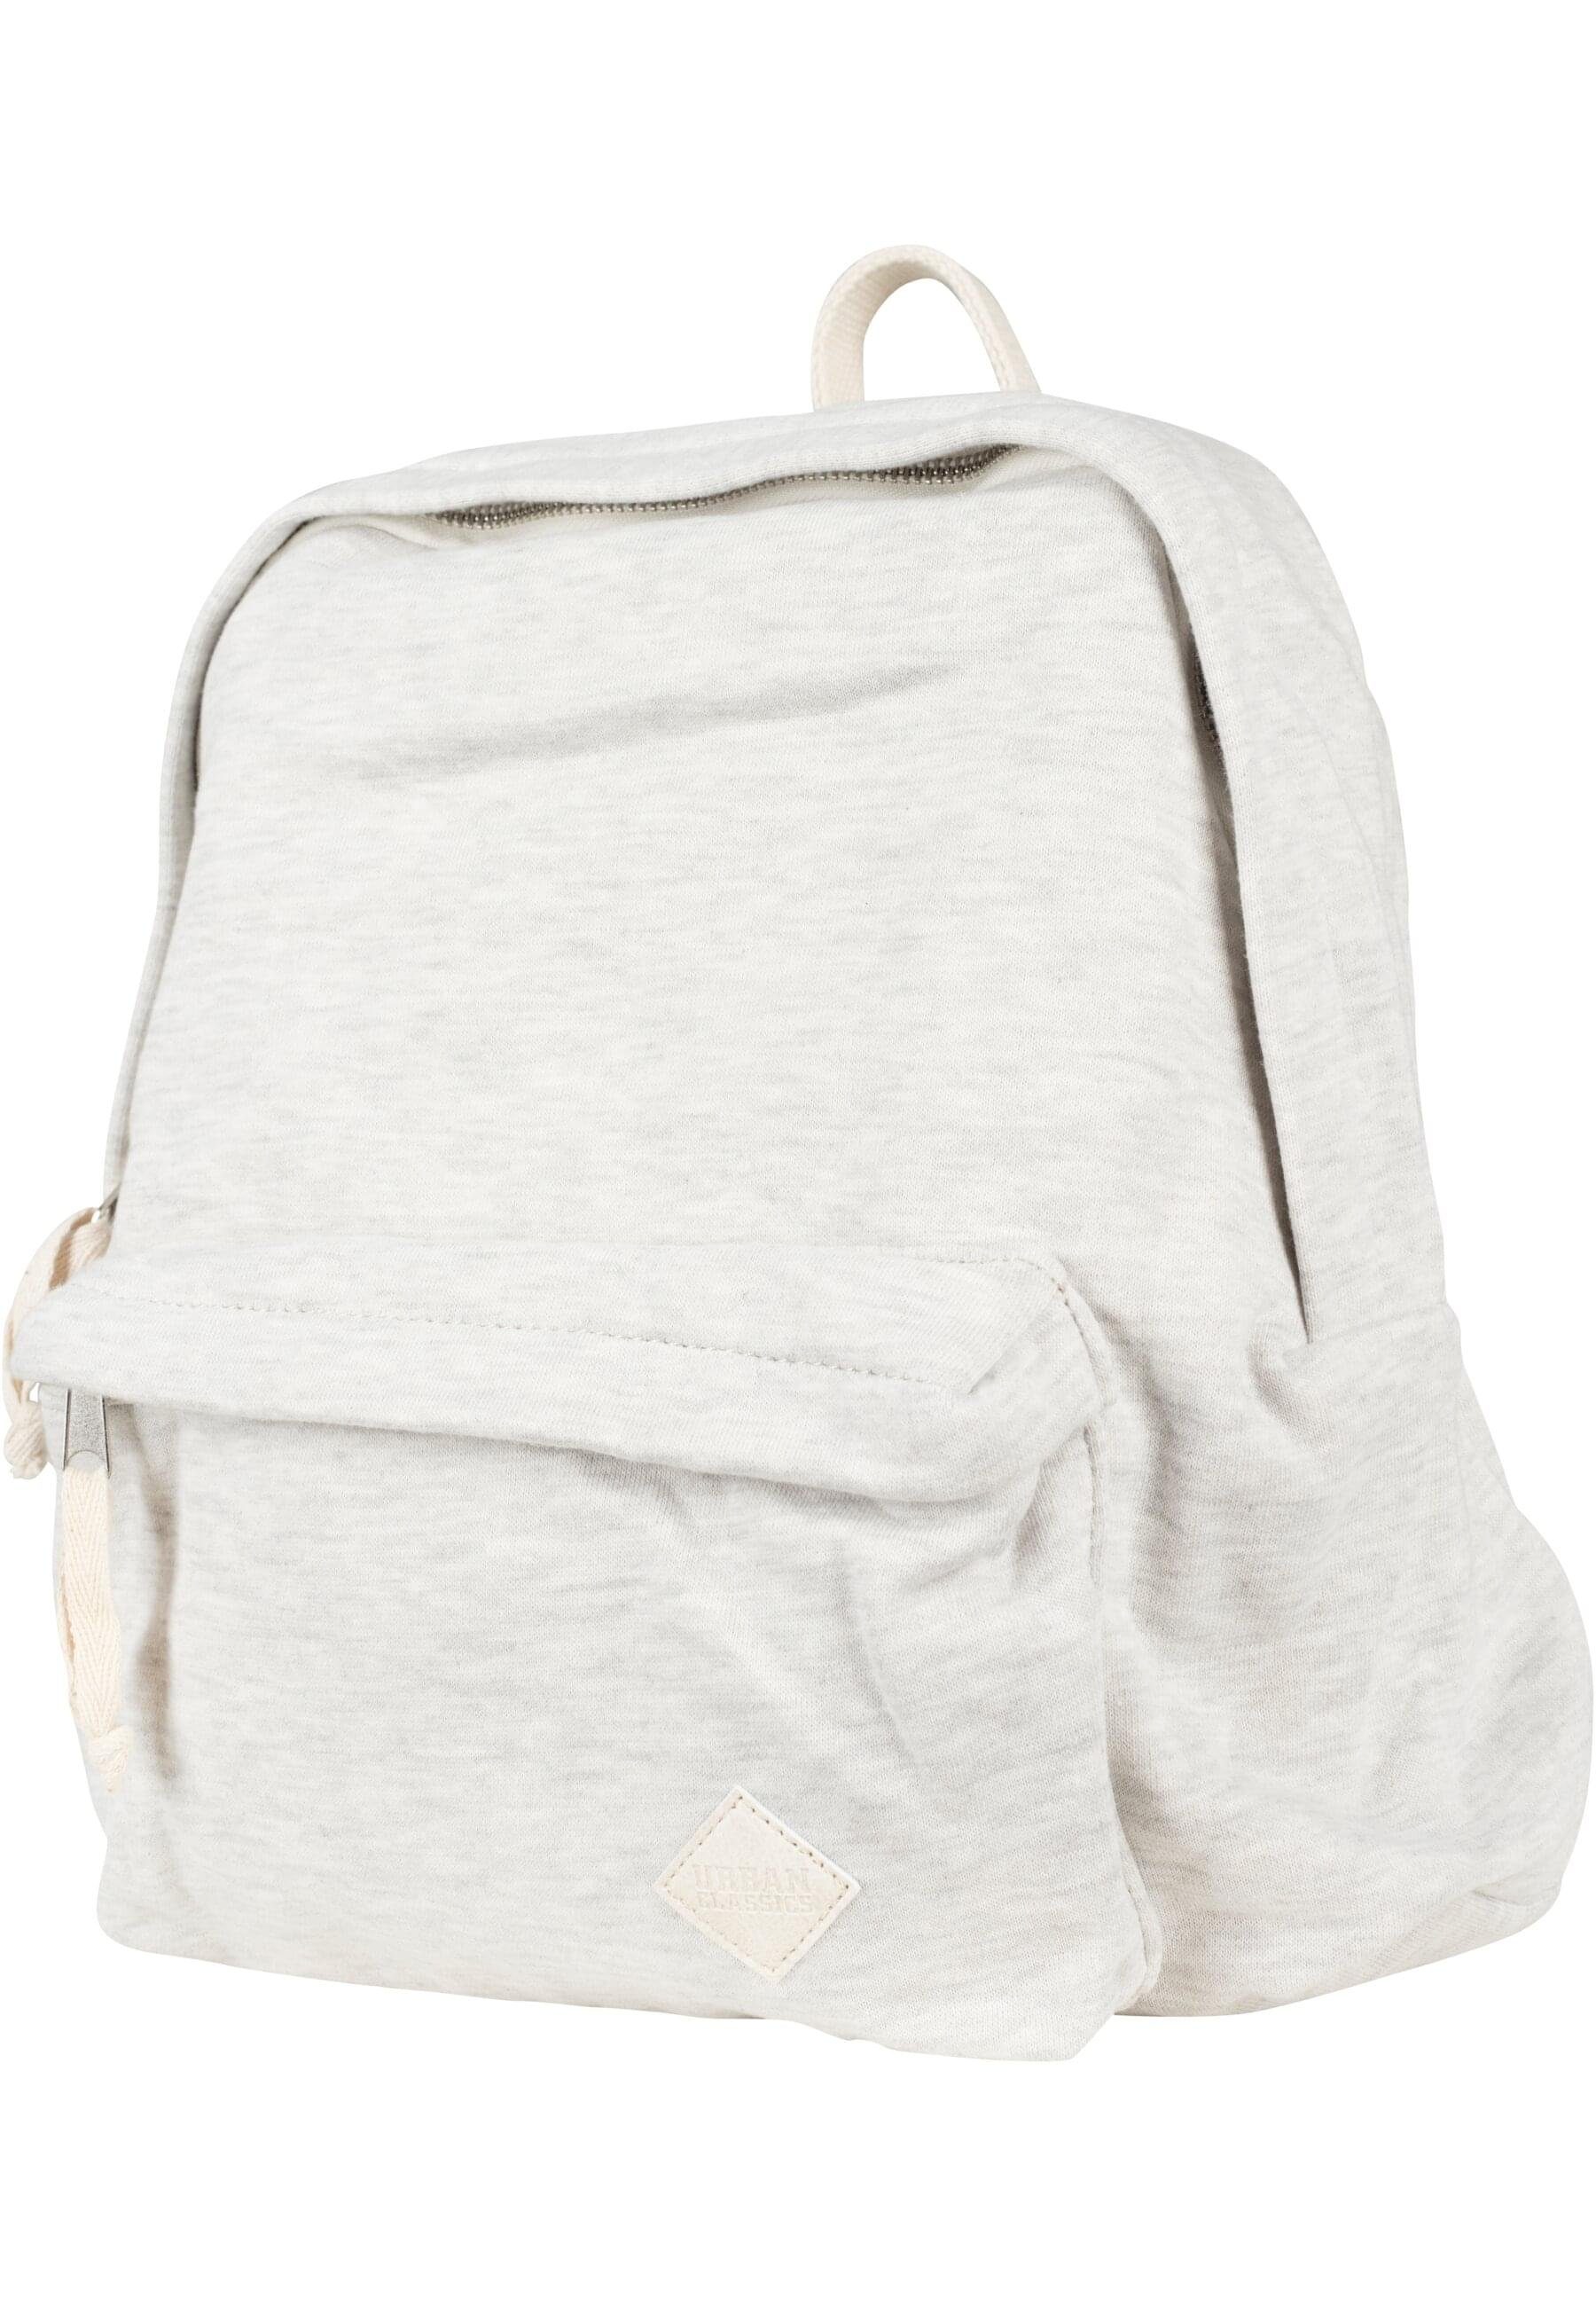 melange/offwhite Unisex offwhite Rucksack URBAN CLASSICS Sweat Backpack